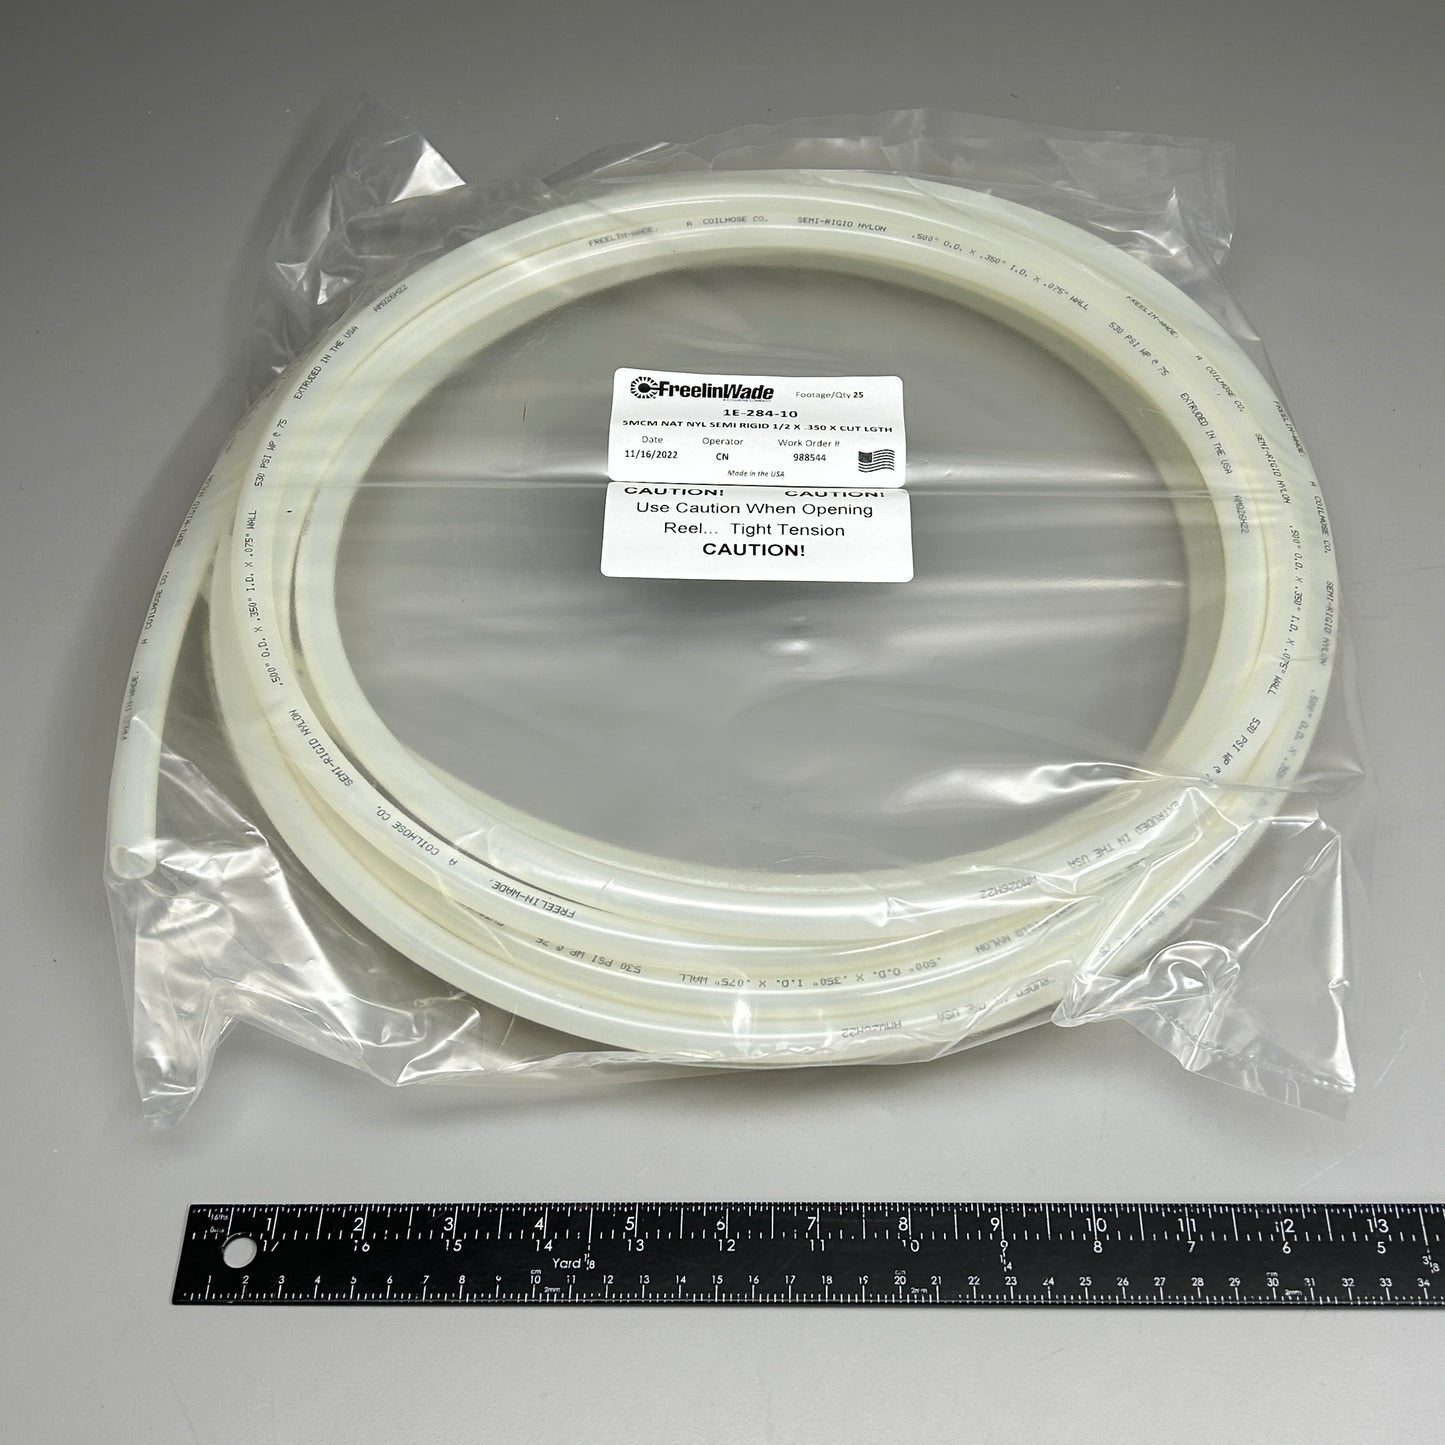 FREELIN-WADE Tubing Nylon Semi-Rigid 25 ft Natural 1E-284-10 (New)